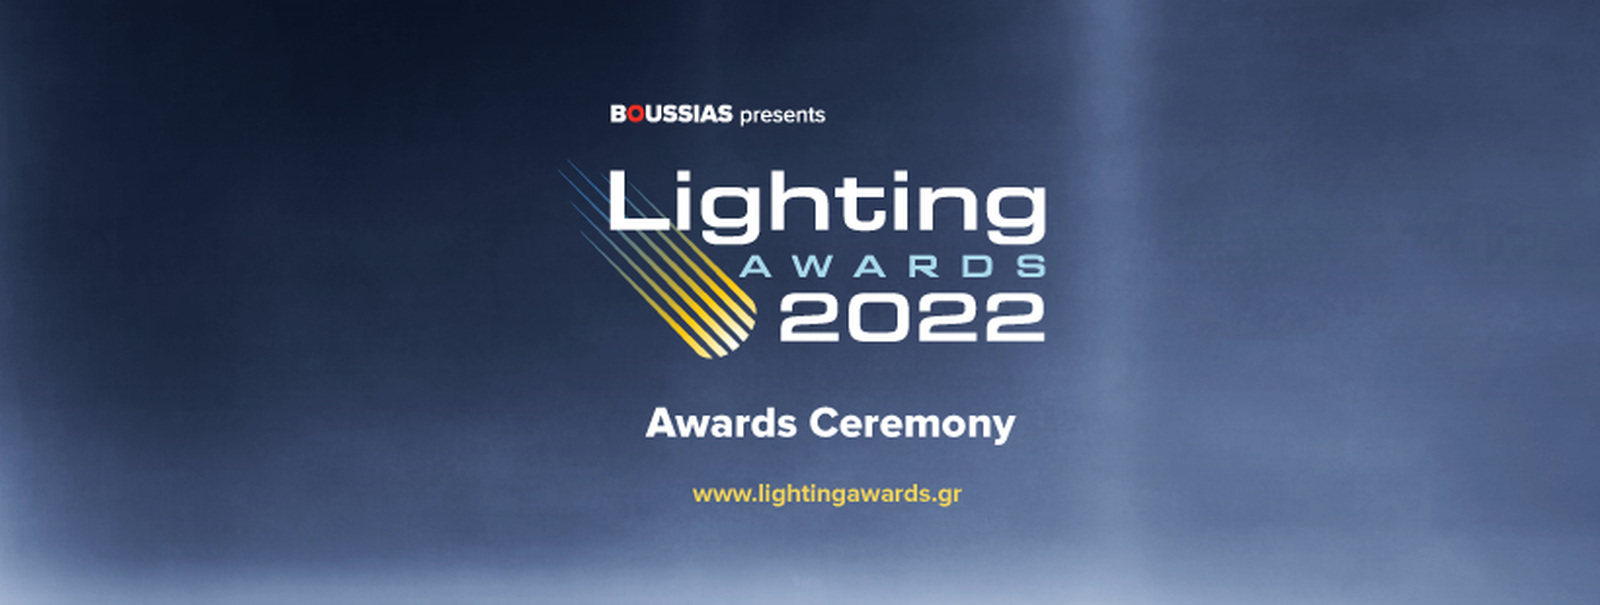 Archisearch Τελετή απονομής Lighting Awards 2022 στις 25.11 | by Boussias